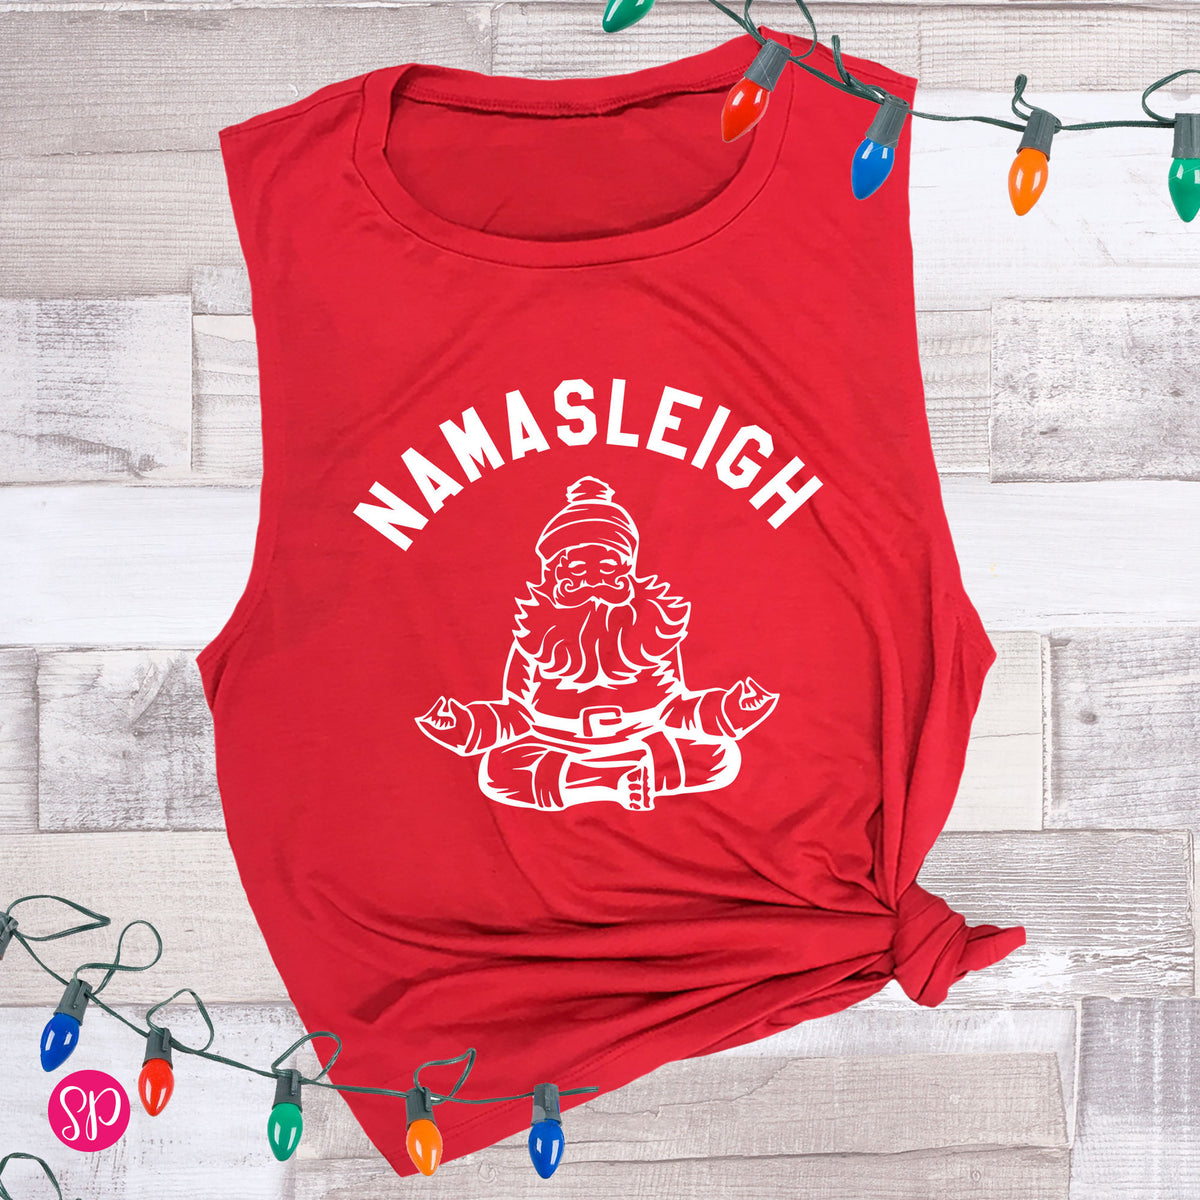 Namasleigh Santa Yogi Yoga Holiday Christmas Workout Muscle Fitness Shirt Tank Top Women